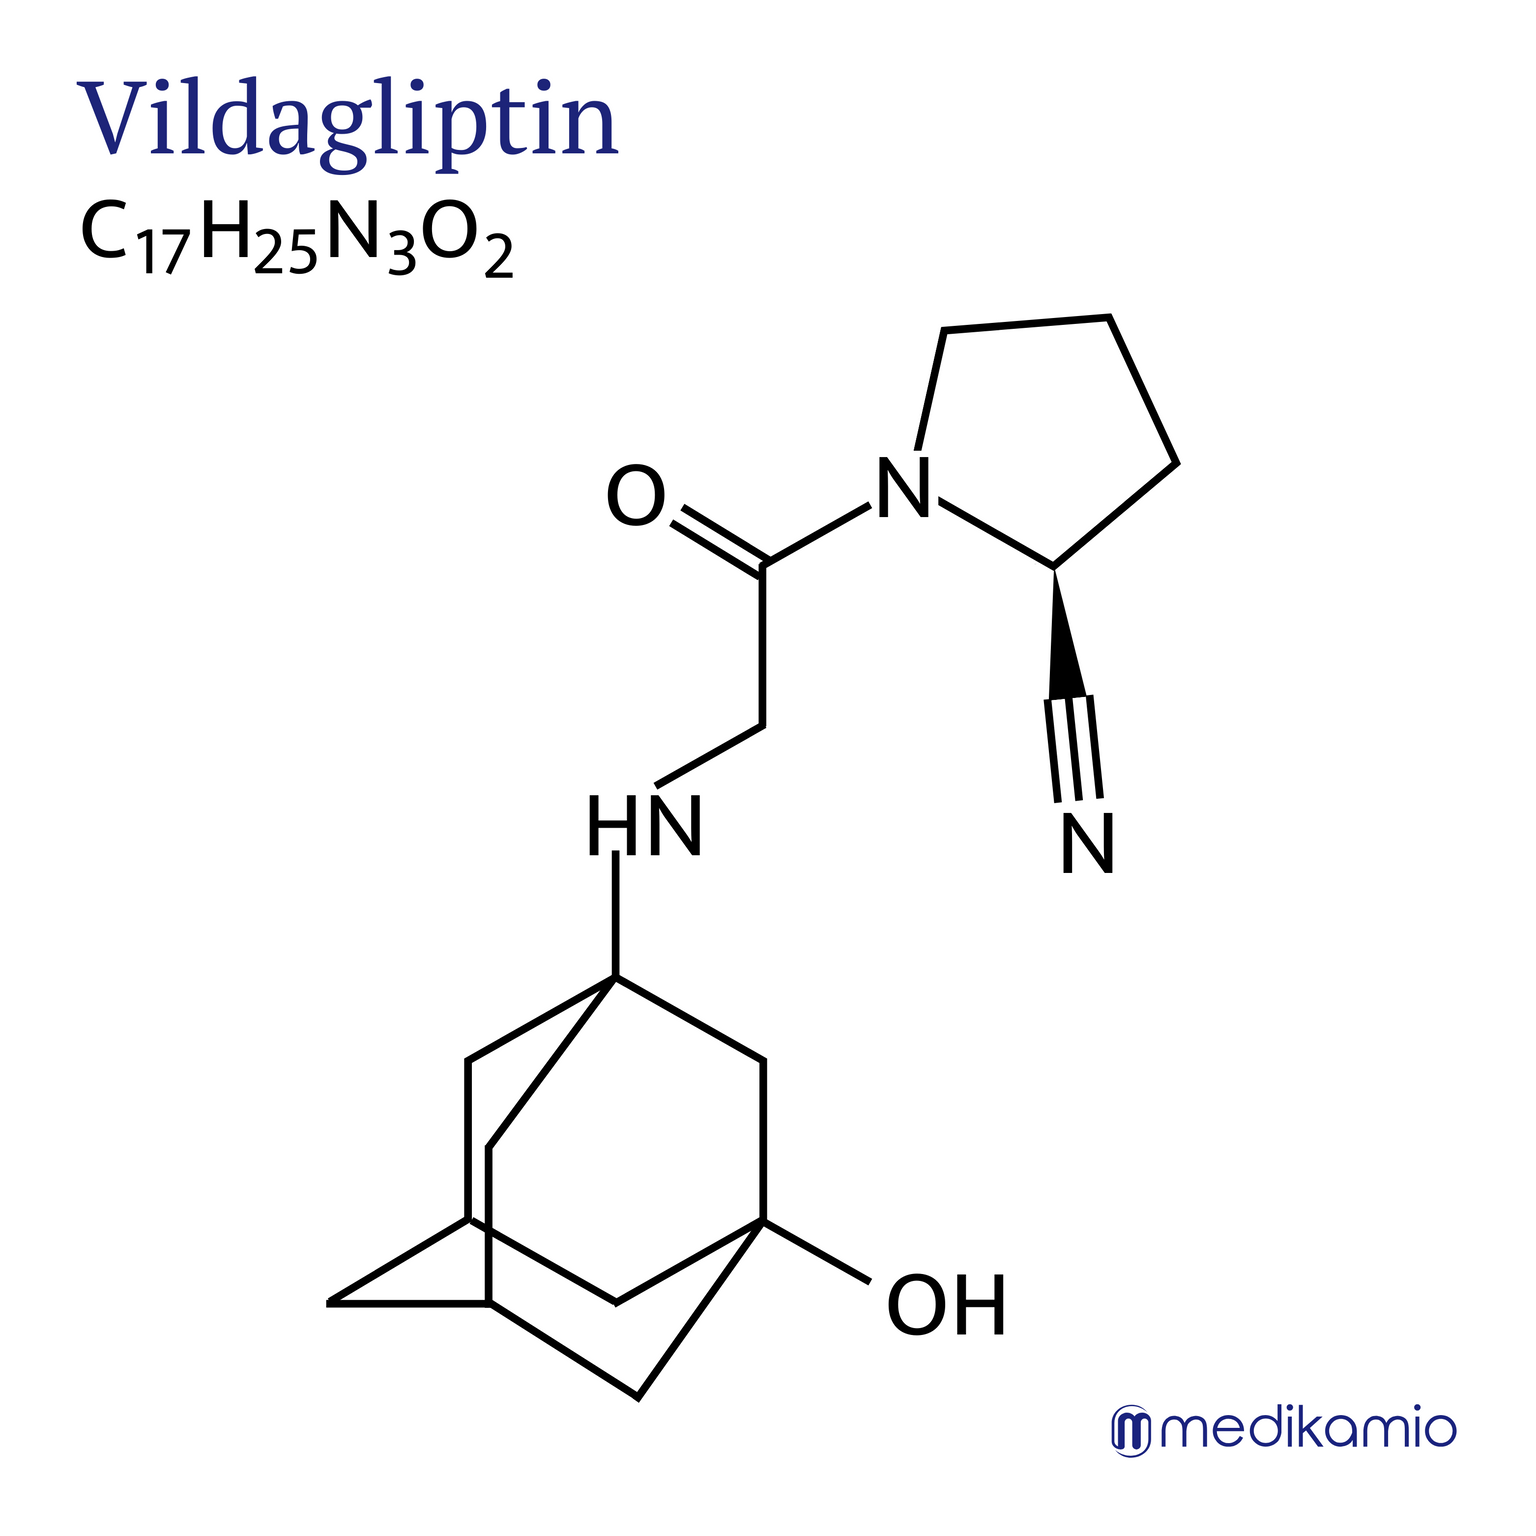 Graphic structural formula of the active substance vildagliptin